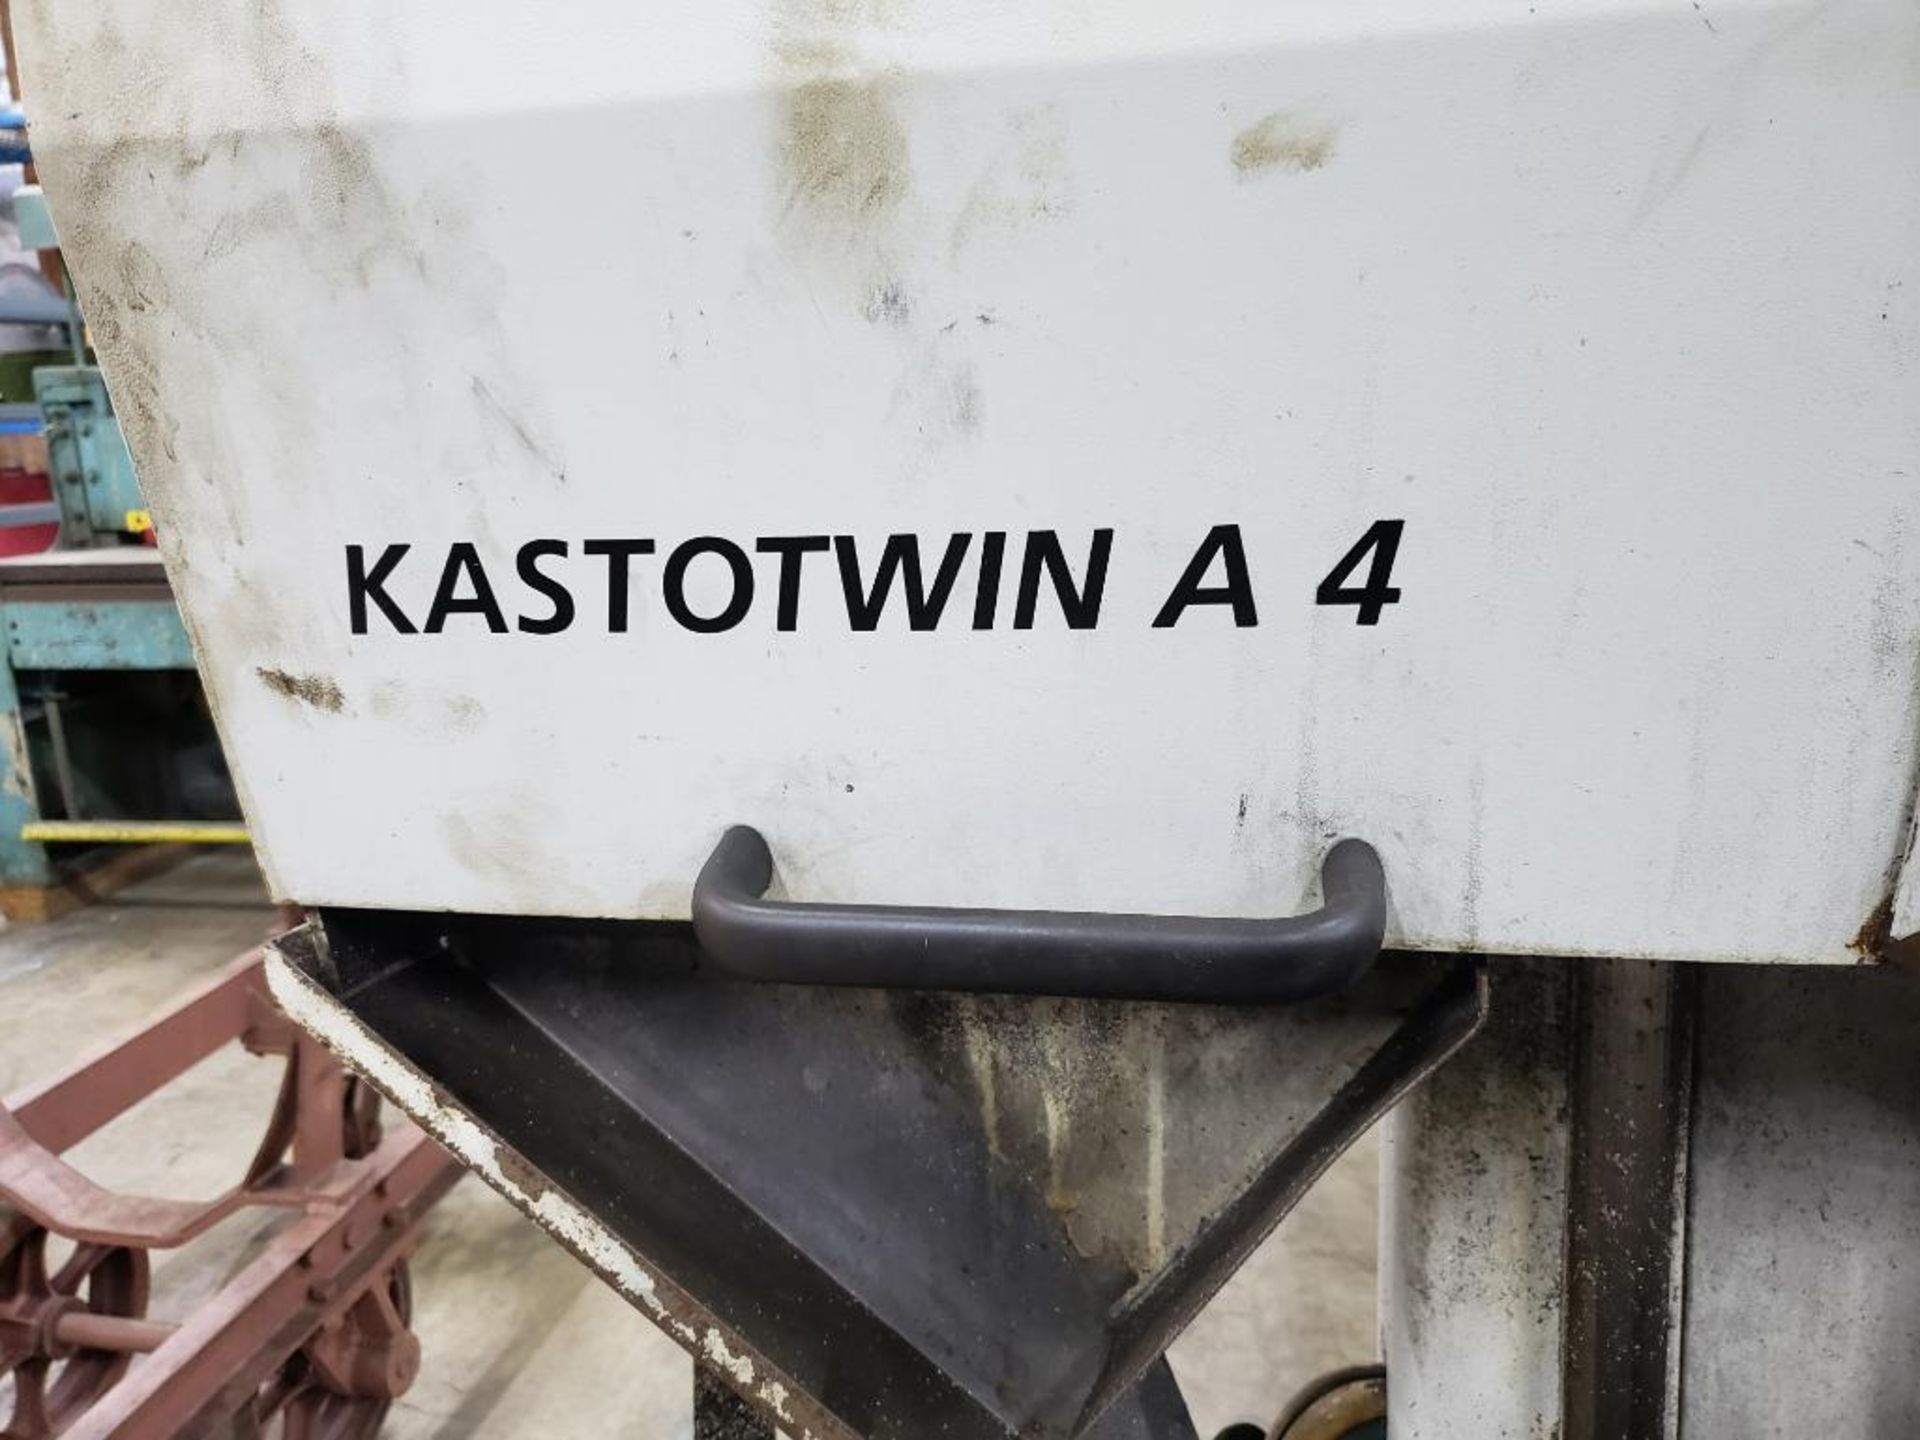 Kasto horizontal CNC band saw Model Kastotwin A4, 3 phase 440v, Mfg year 2000. Serial # 6428102047. - Bild 4 aus 32